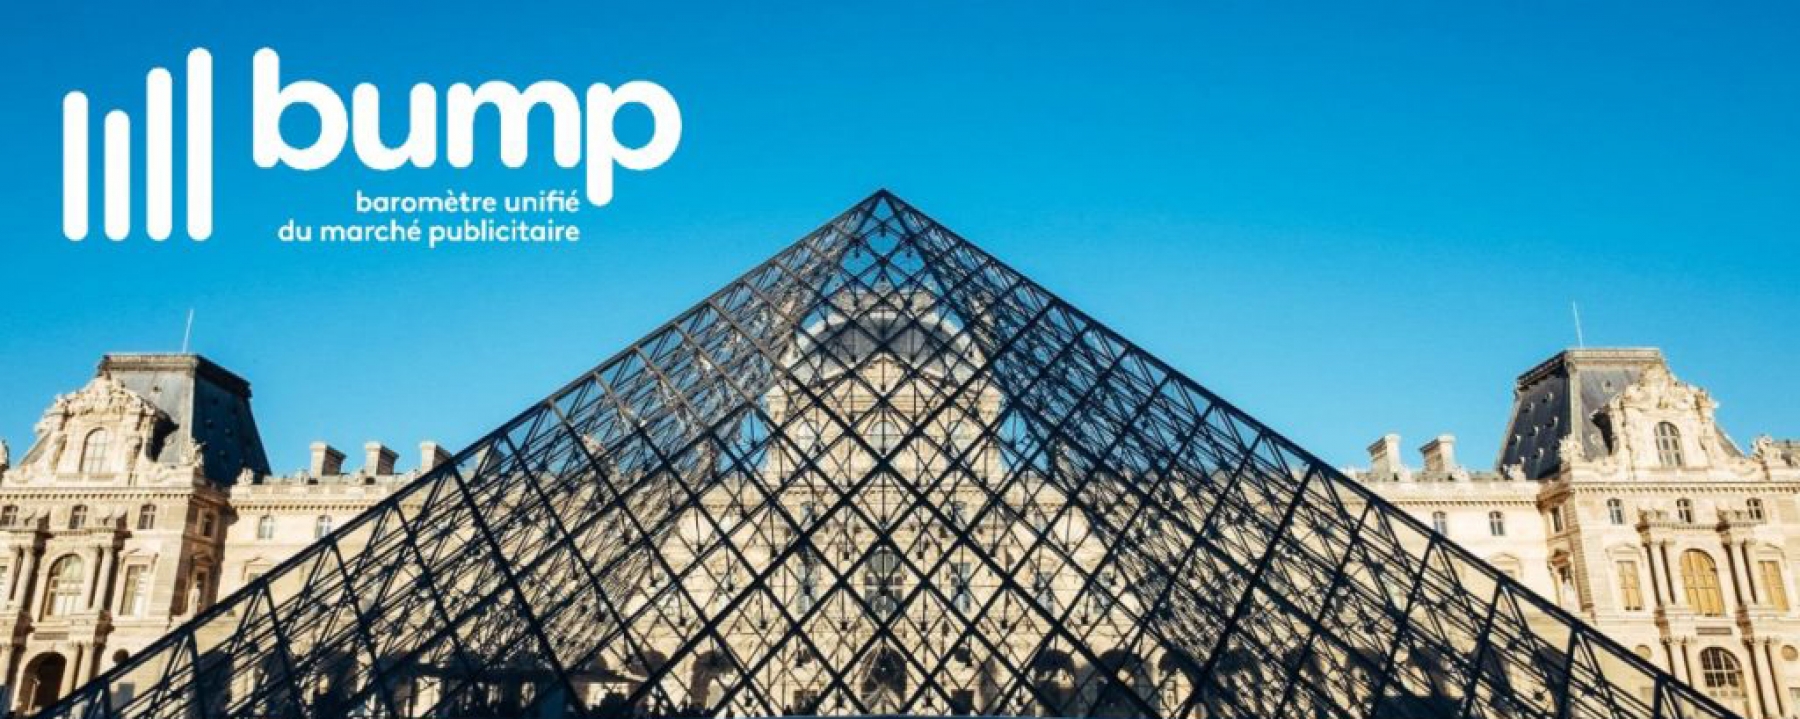 BUMP 1er semestre 2021 par IREP, Kantar et France PUB 